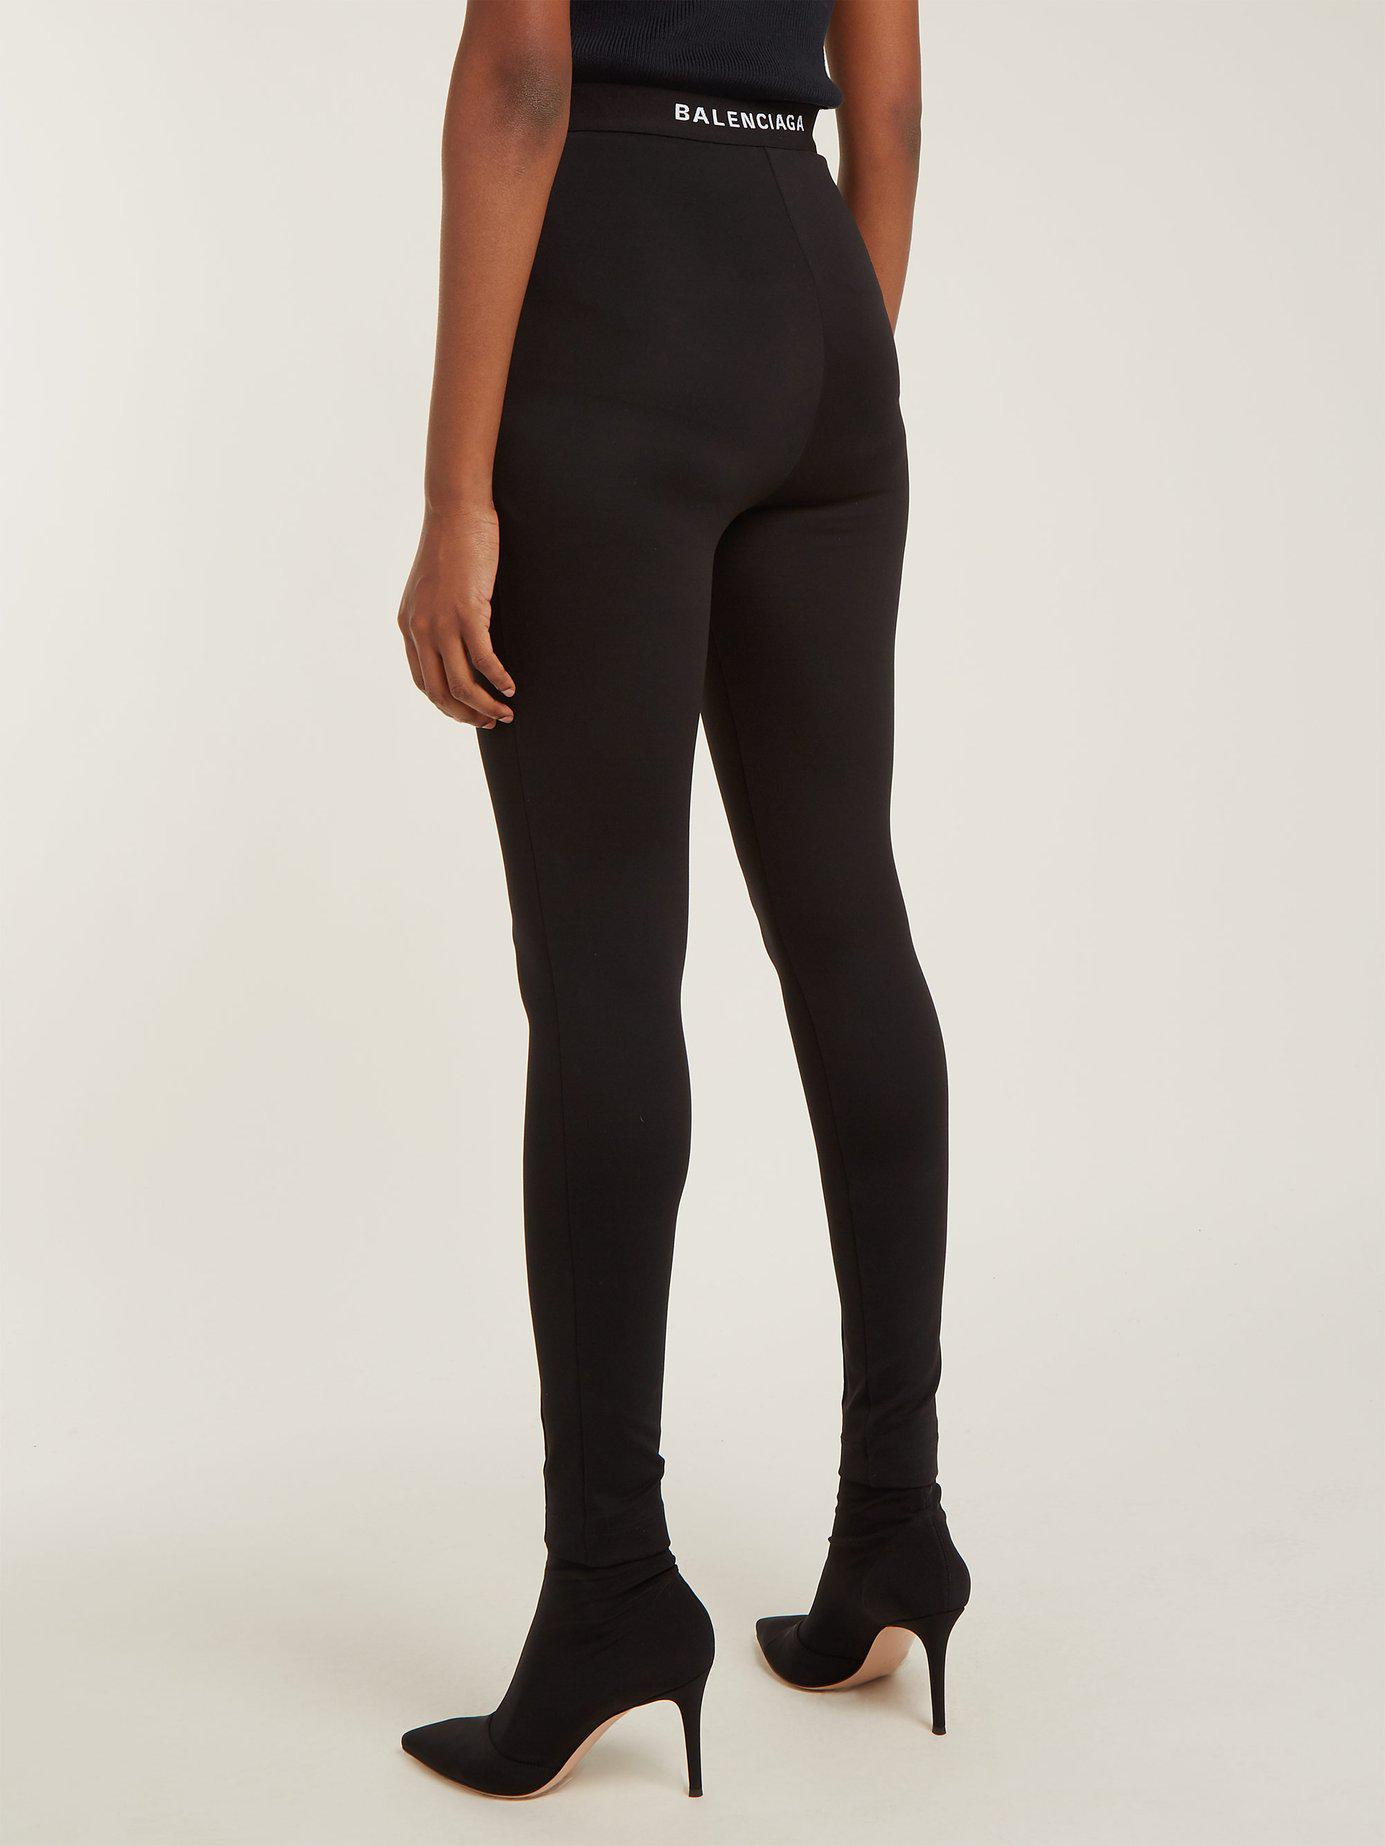 Balenciaga Logo Jersey Leggings in Black | Lyst